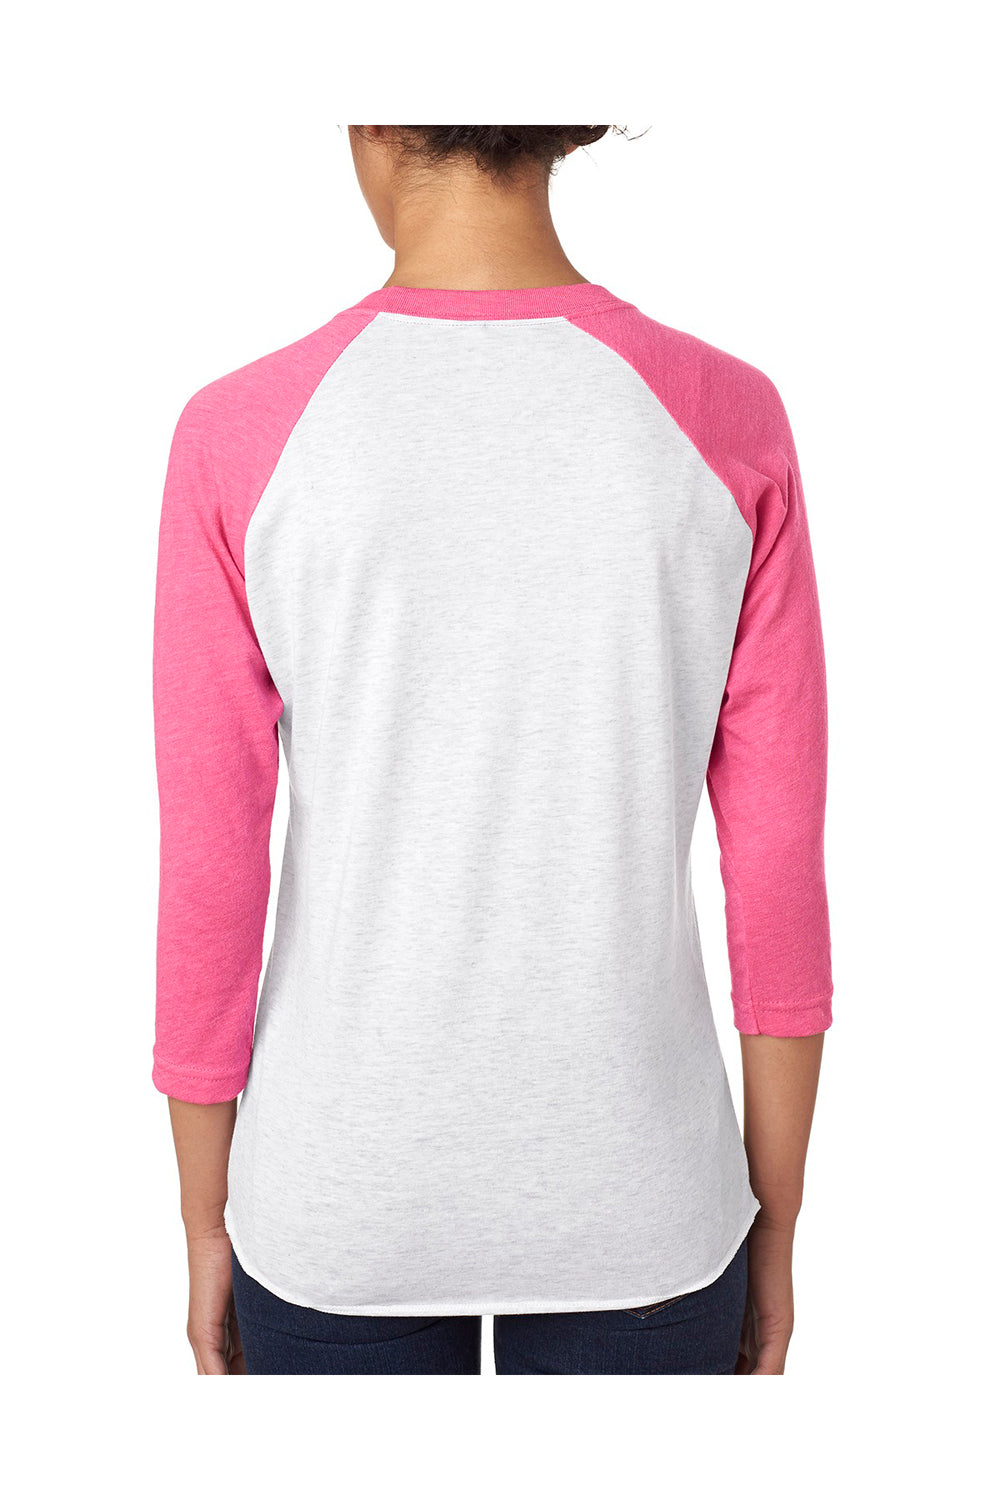 Next Level 6051 Mens Jersey 3/4 Sleeve Crewneck T-Shirt Heather White/Pink Back